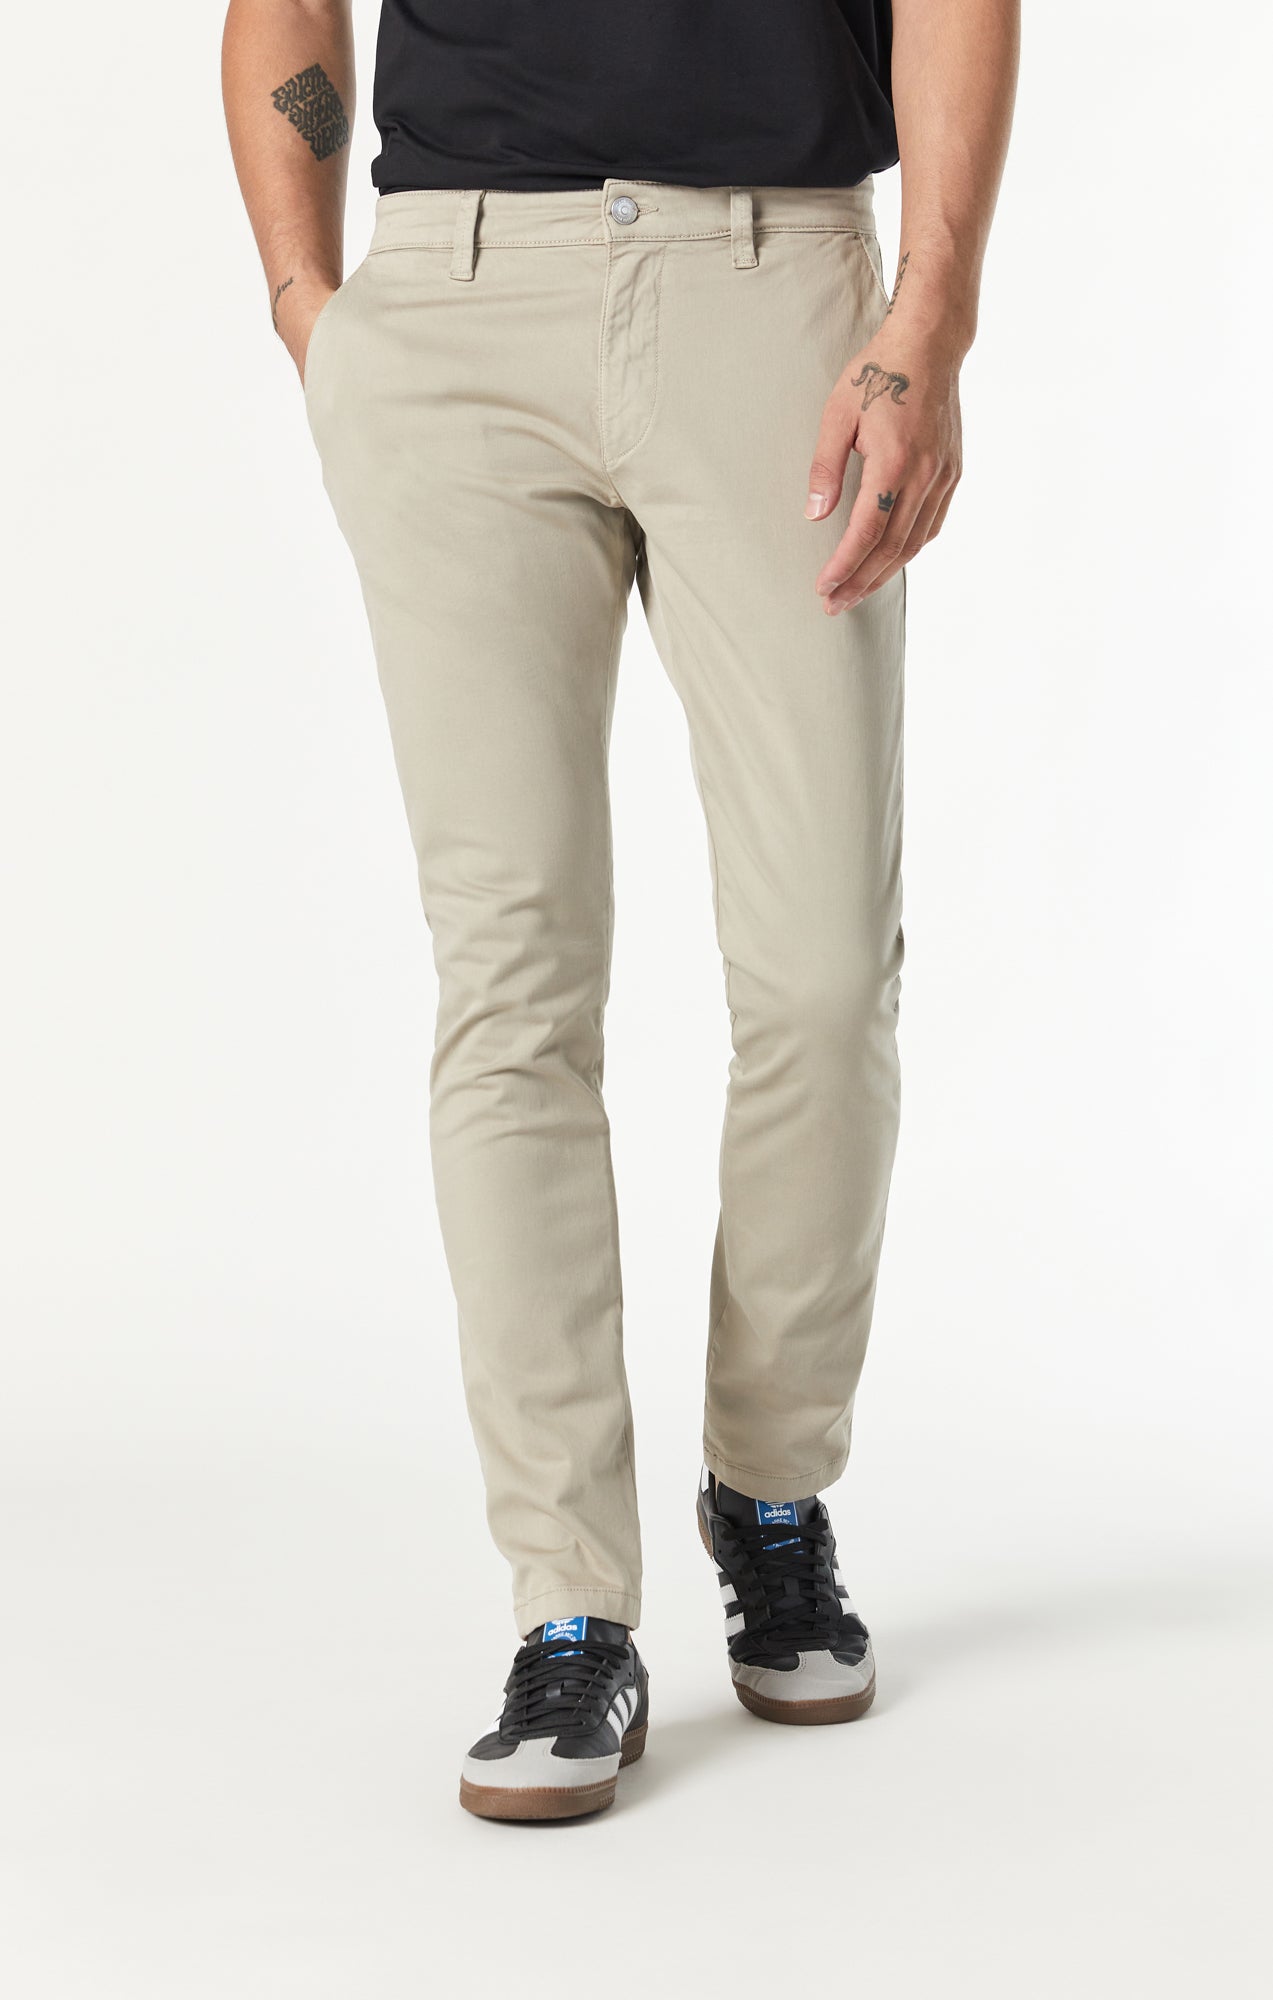 Jyeity Fall New Arrivals Men's Casual Color Drawstring Binding Leg  Breathable Slim-fit Pants Mens Sleep Pants Khaki Size  